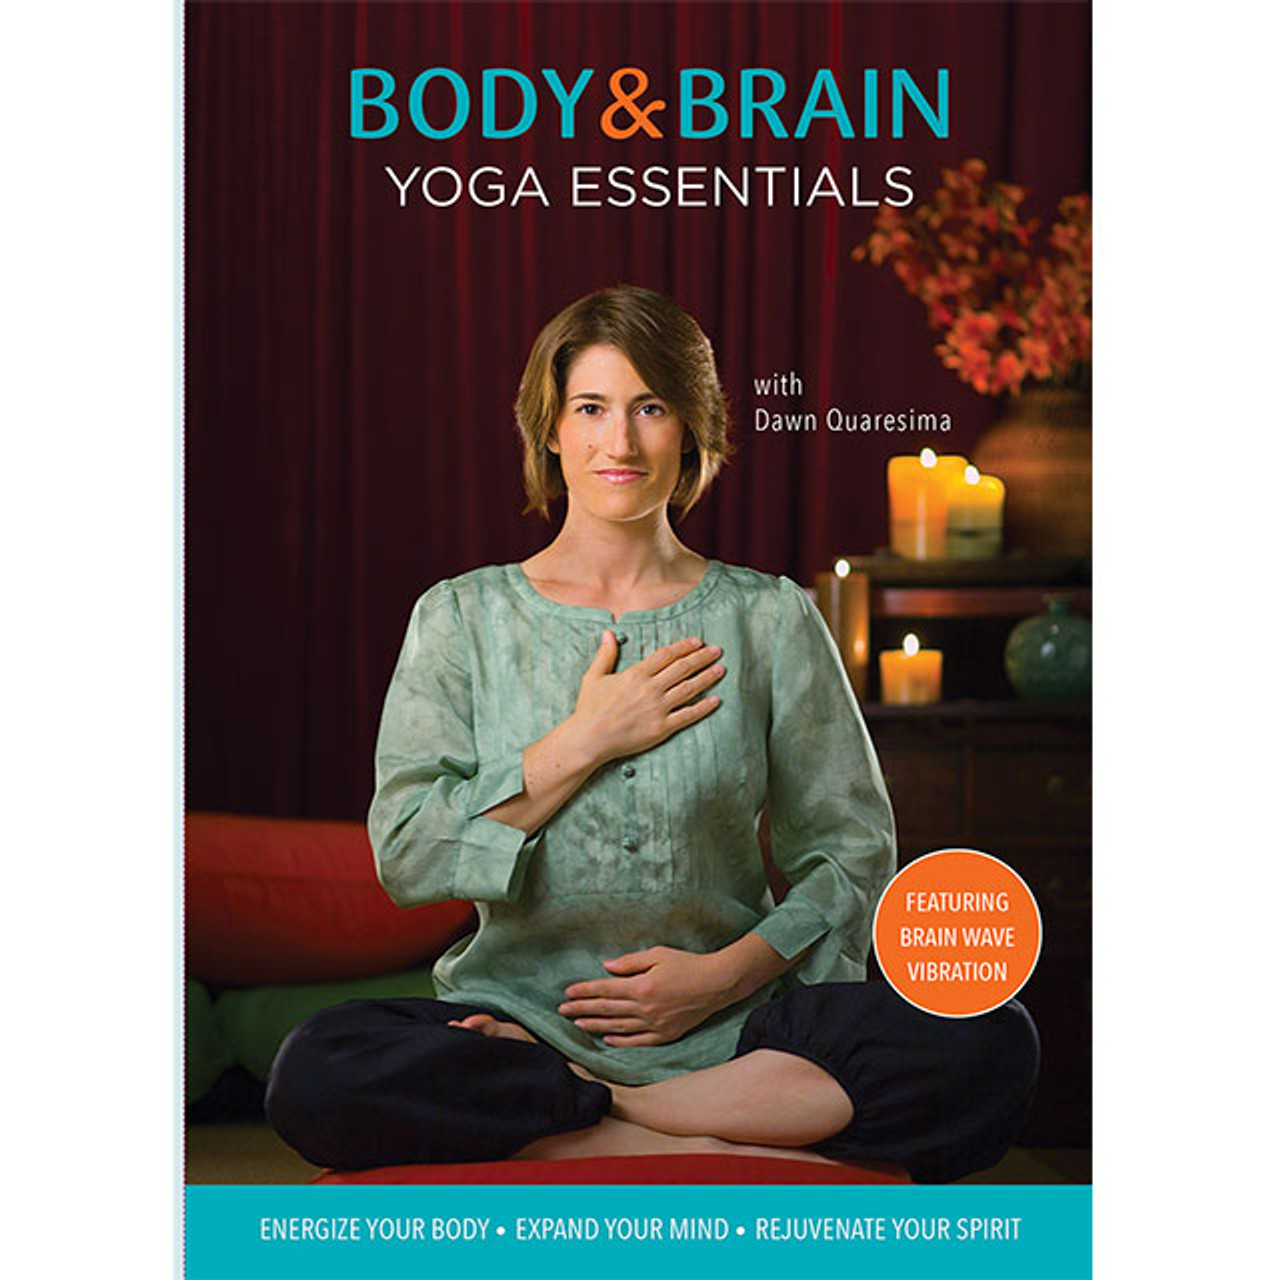 Body & Brain Yoga Essentials: Featuring Brain Wave Vibration